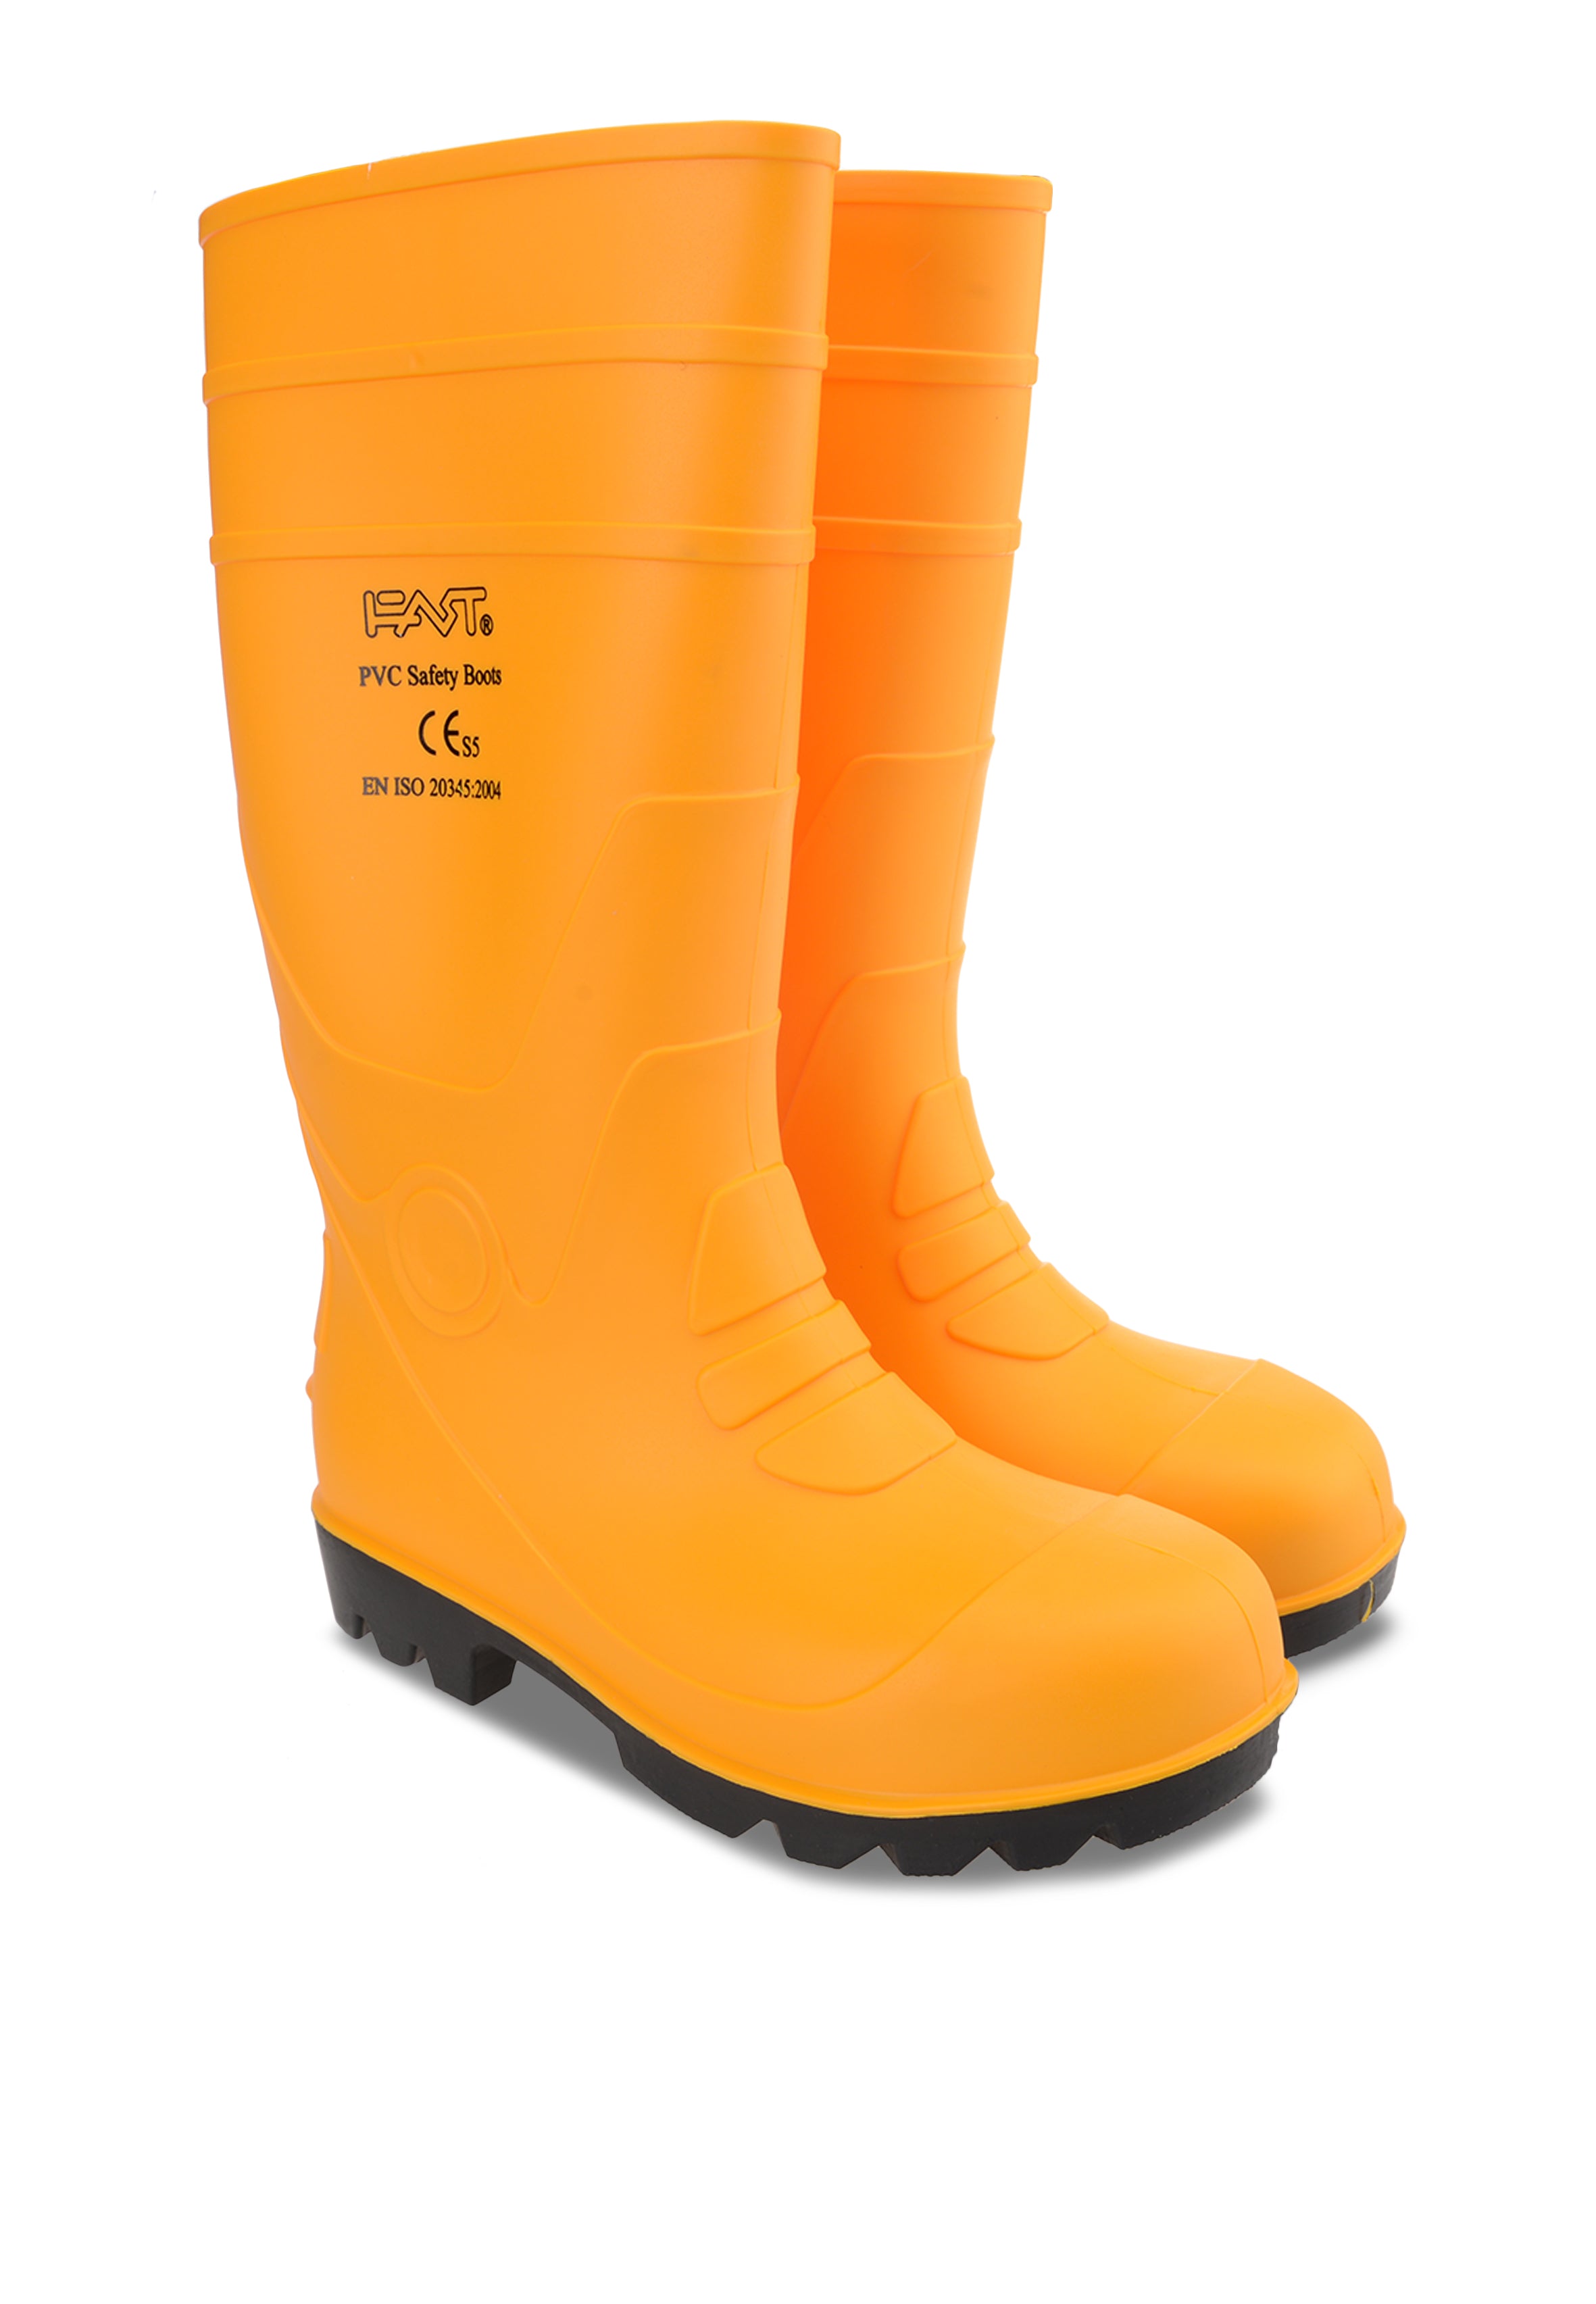 Safety Rain Boots (Steel Toe Cap + Steel Soles)-FAST-YW-EU Size: 37-偉豐鞋 WELL SHOE HK-Well Shoe-偉豐鞋-偉豐網-荃灣鞋店-Functional shoes-Hong Kong Tsuen Wan Shoe Store-Tai Wan Shoe-Japan Shoe-高品質功能鞋-台灣進口鞋-日本進口鞋-High-quality shoes-鞋類配件-荃灣進口鞋-香港鞋店-優質鞋類產品-水靴-帆布鞋-廚師鞋-香港鞋品牌-Hong Kong Shoes brand-長者鞋-Hong Kong Rain Boots-Kitchen shoes-Cruthes-Slipper-Well Shoe Hong Kong-Anello-Arriba-休閒鞋-舒適鞋-健康鞋-皮鞋-Healthy shoes-Leather shoes-Hiking shoes